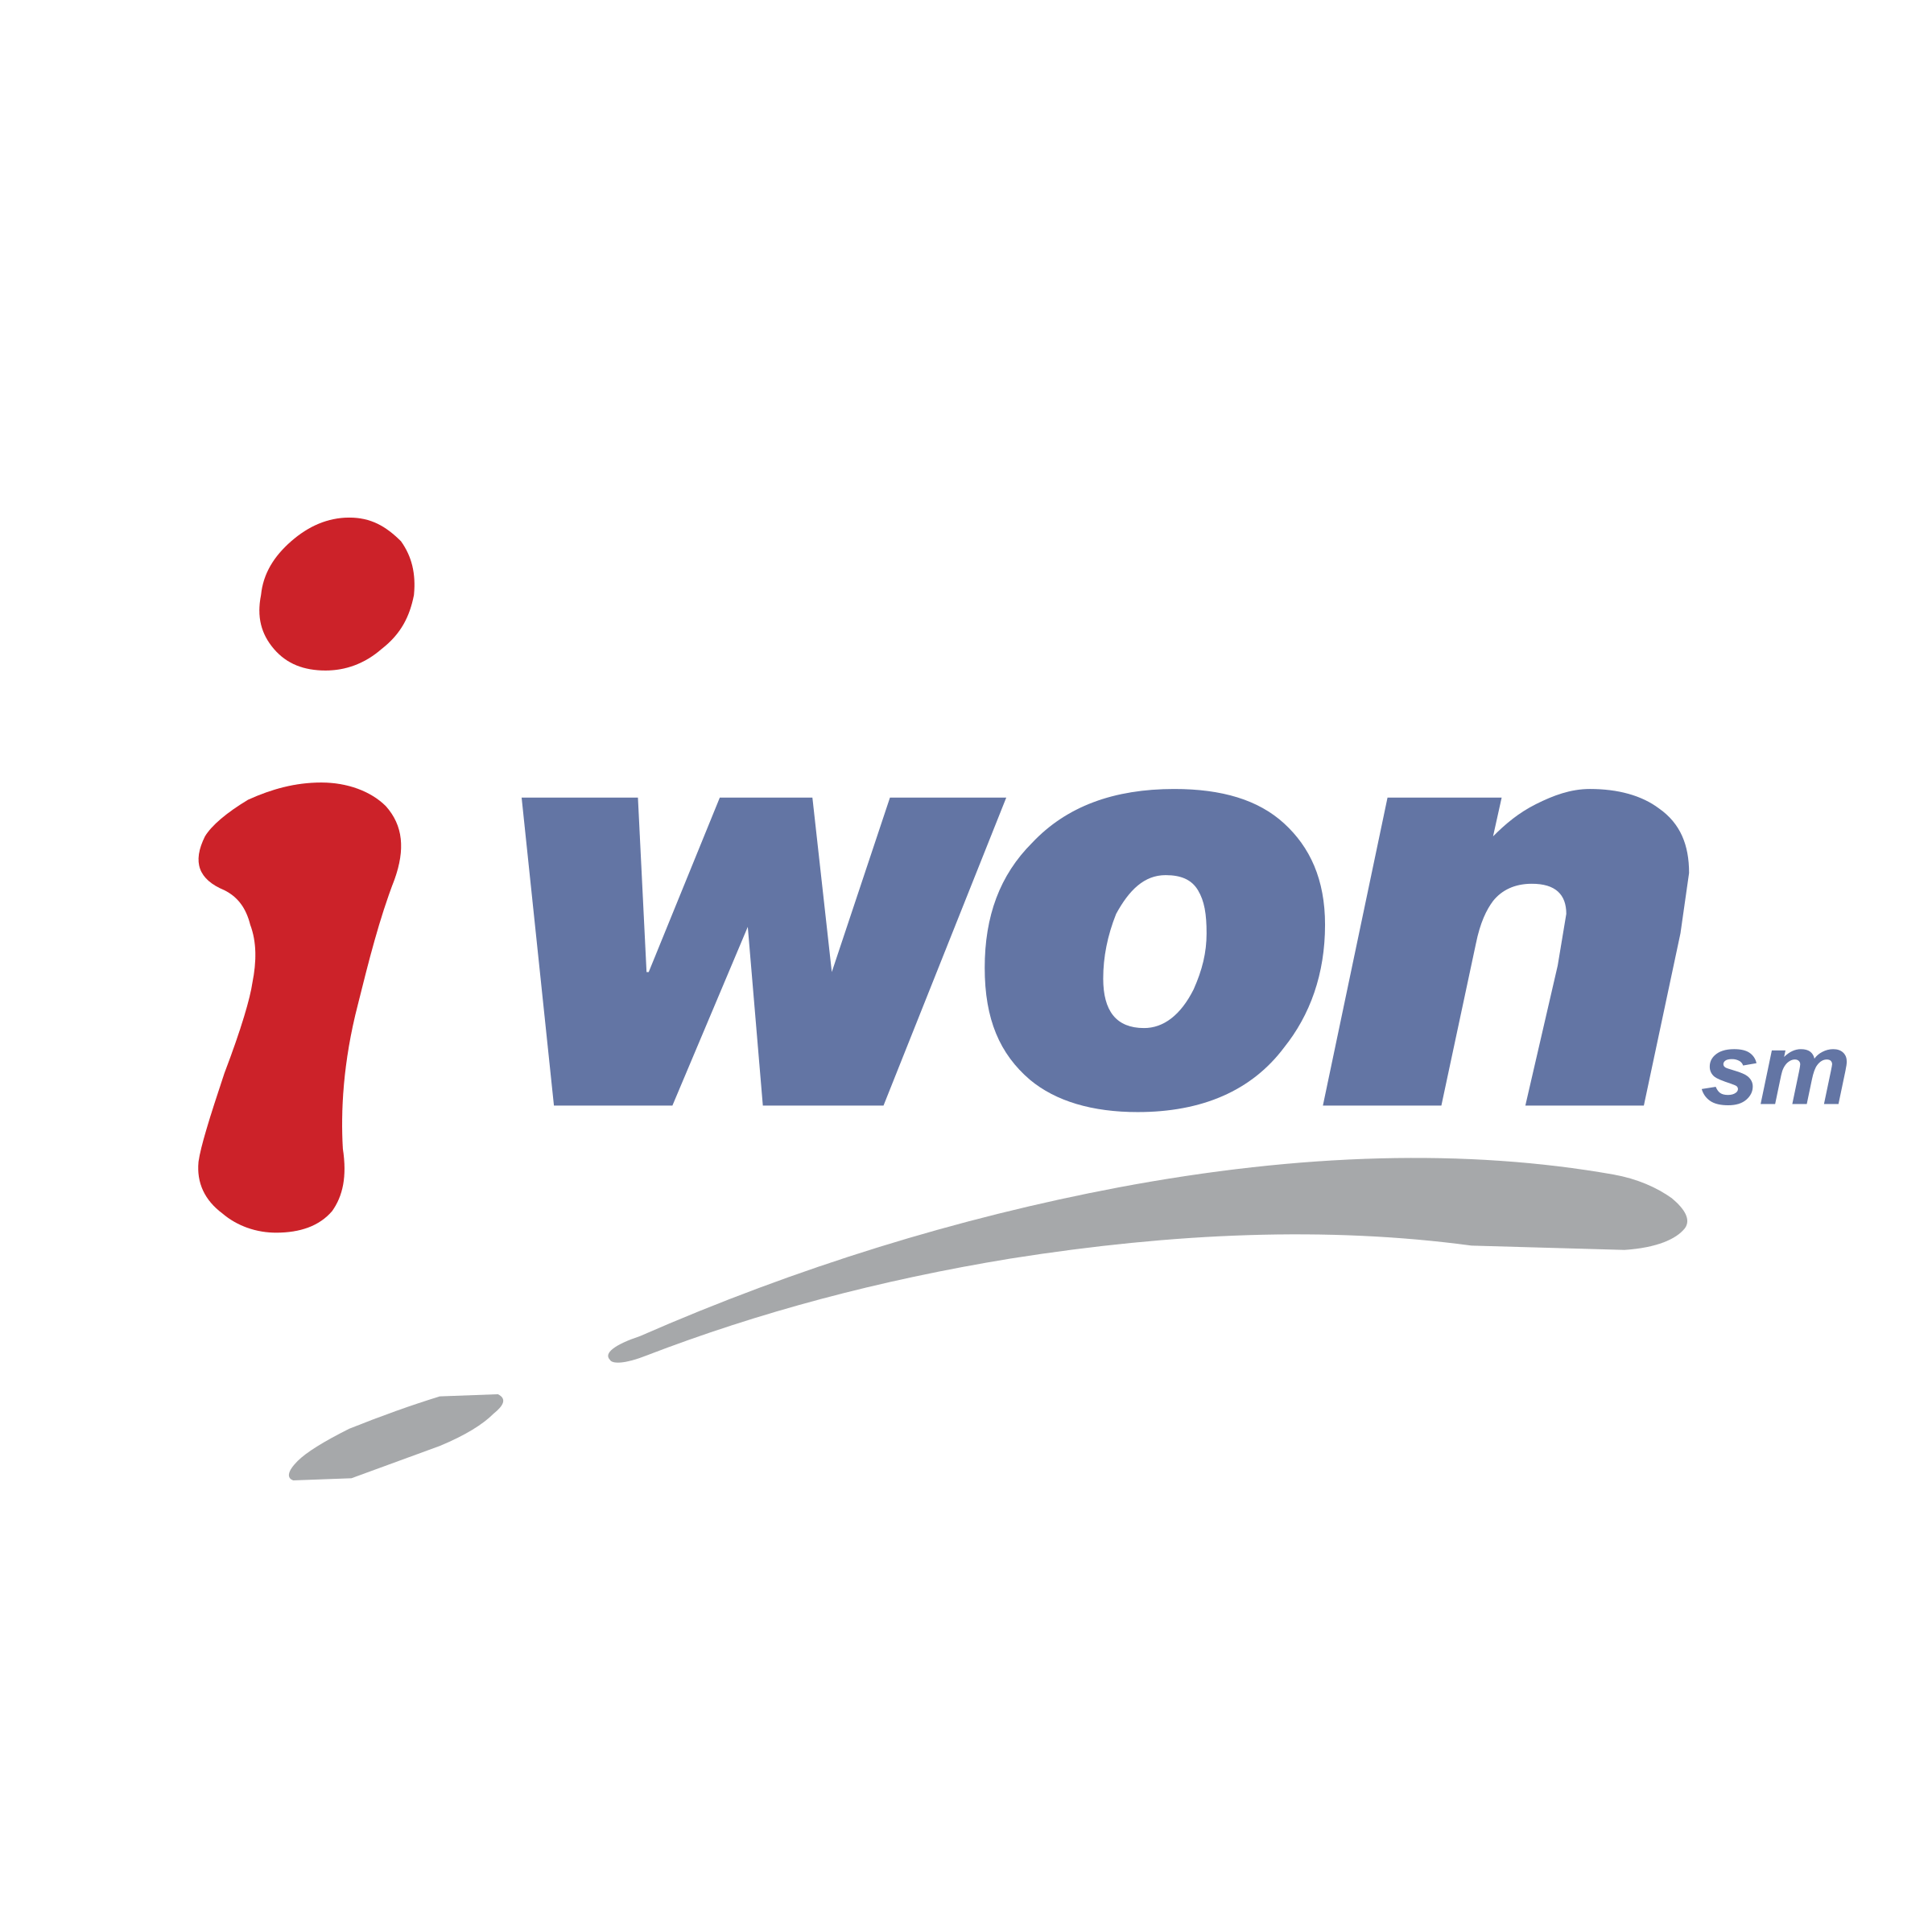 Iwon Logo - iWon Logo PNG Transparent & SVG Vector - Freebie Supply